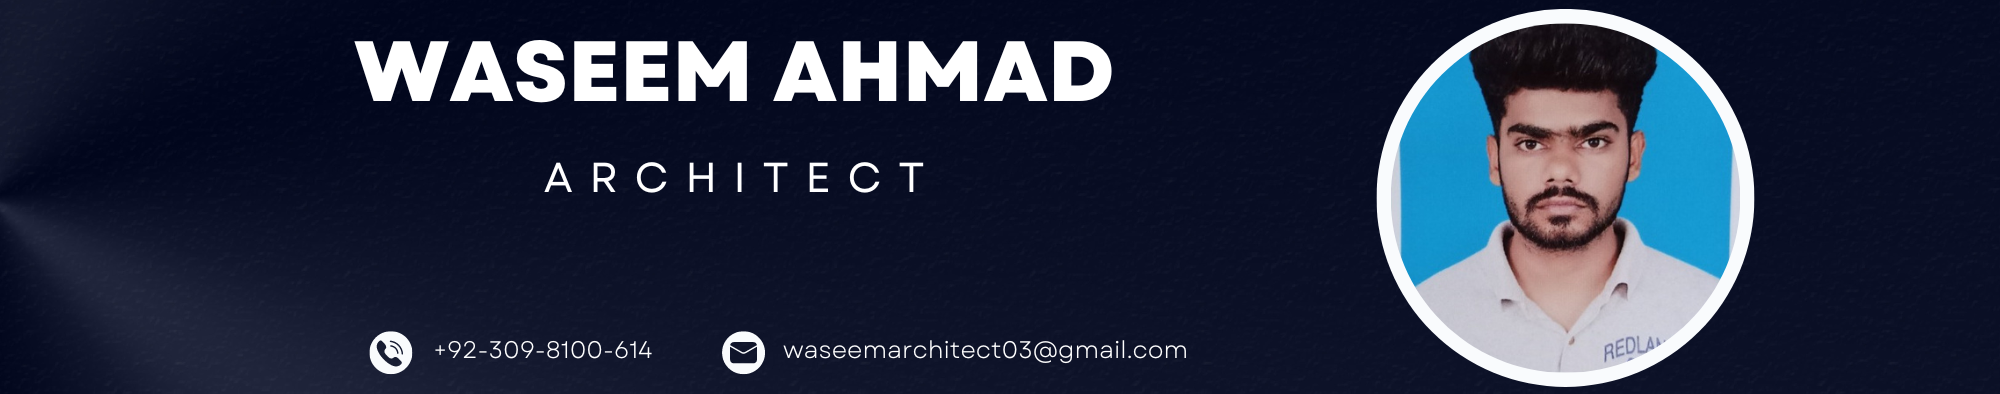 Waseem Ahmad's profile banner